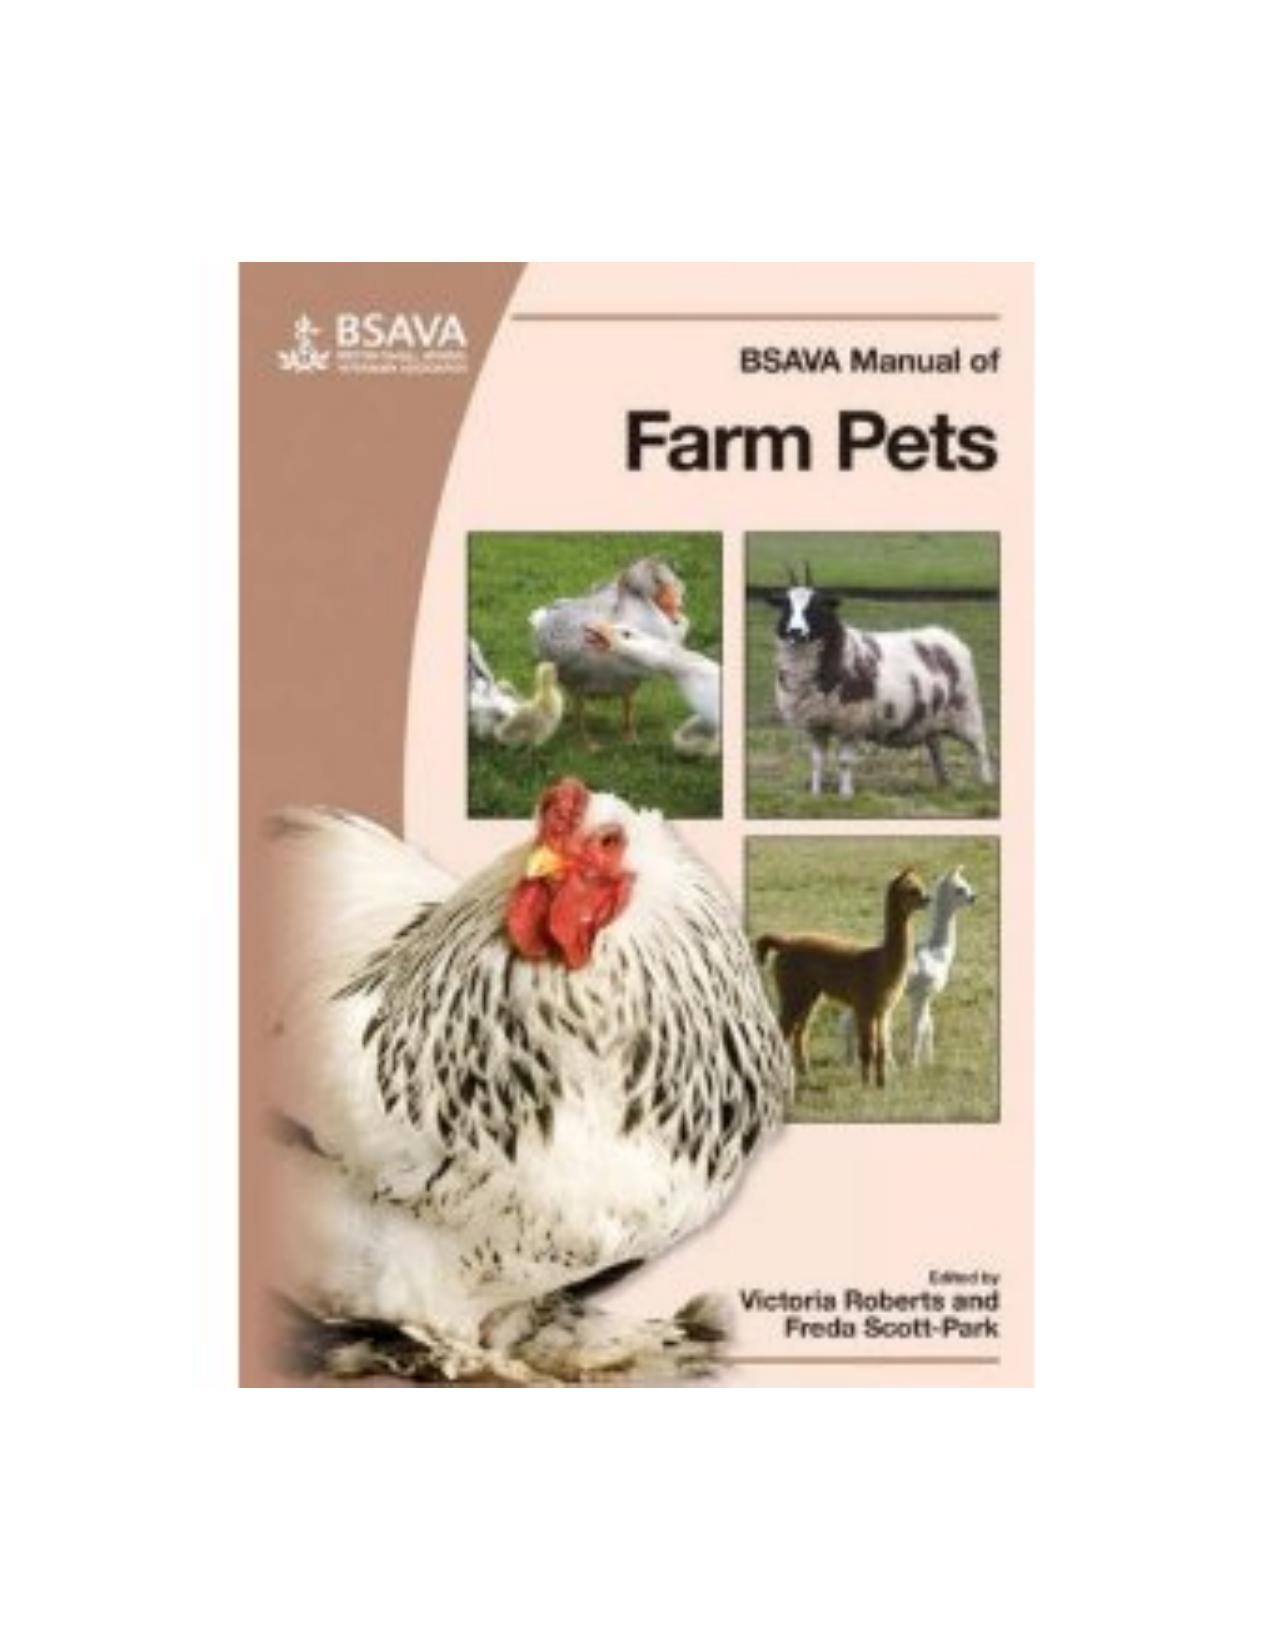 Mannual of Farm Pets 2008